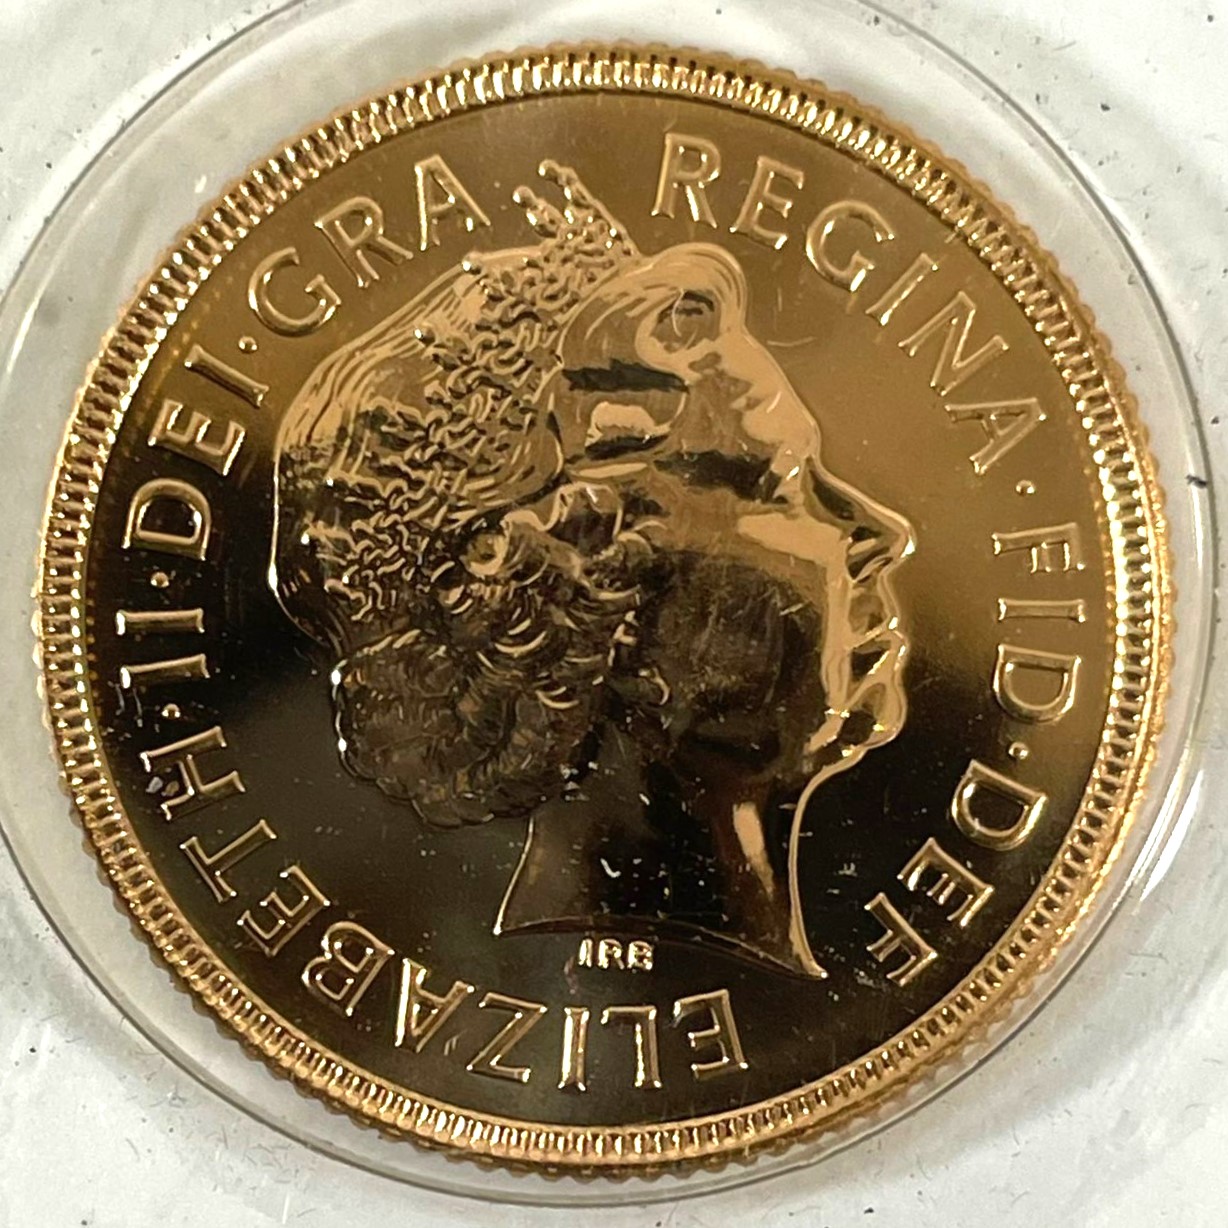 Elizabeth II gold full sovereign dated 2002 - sealed